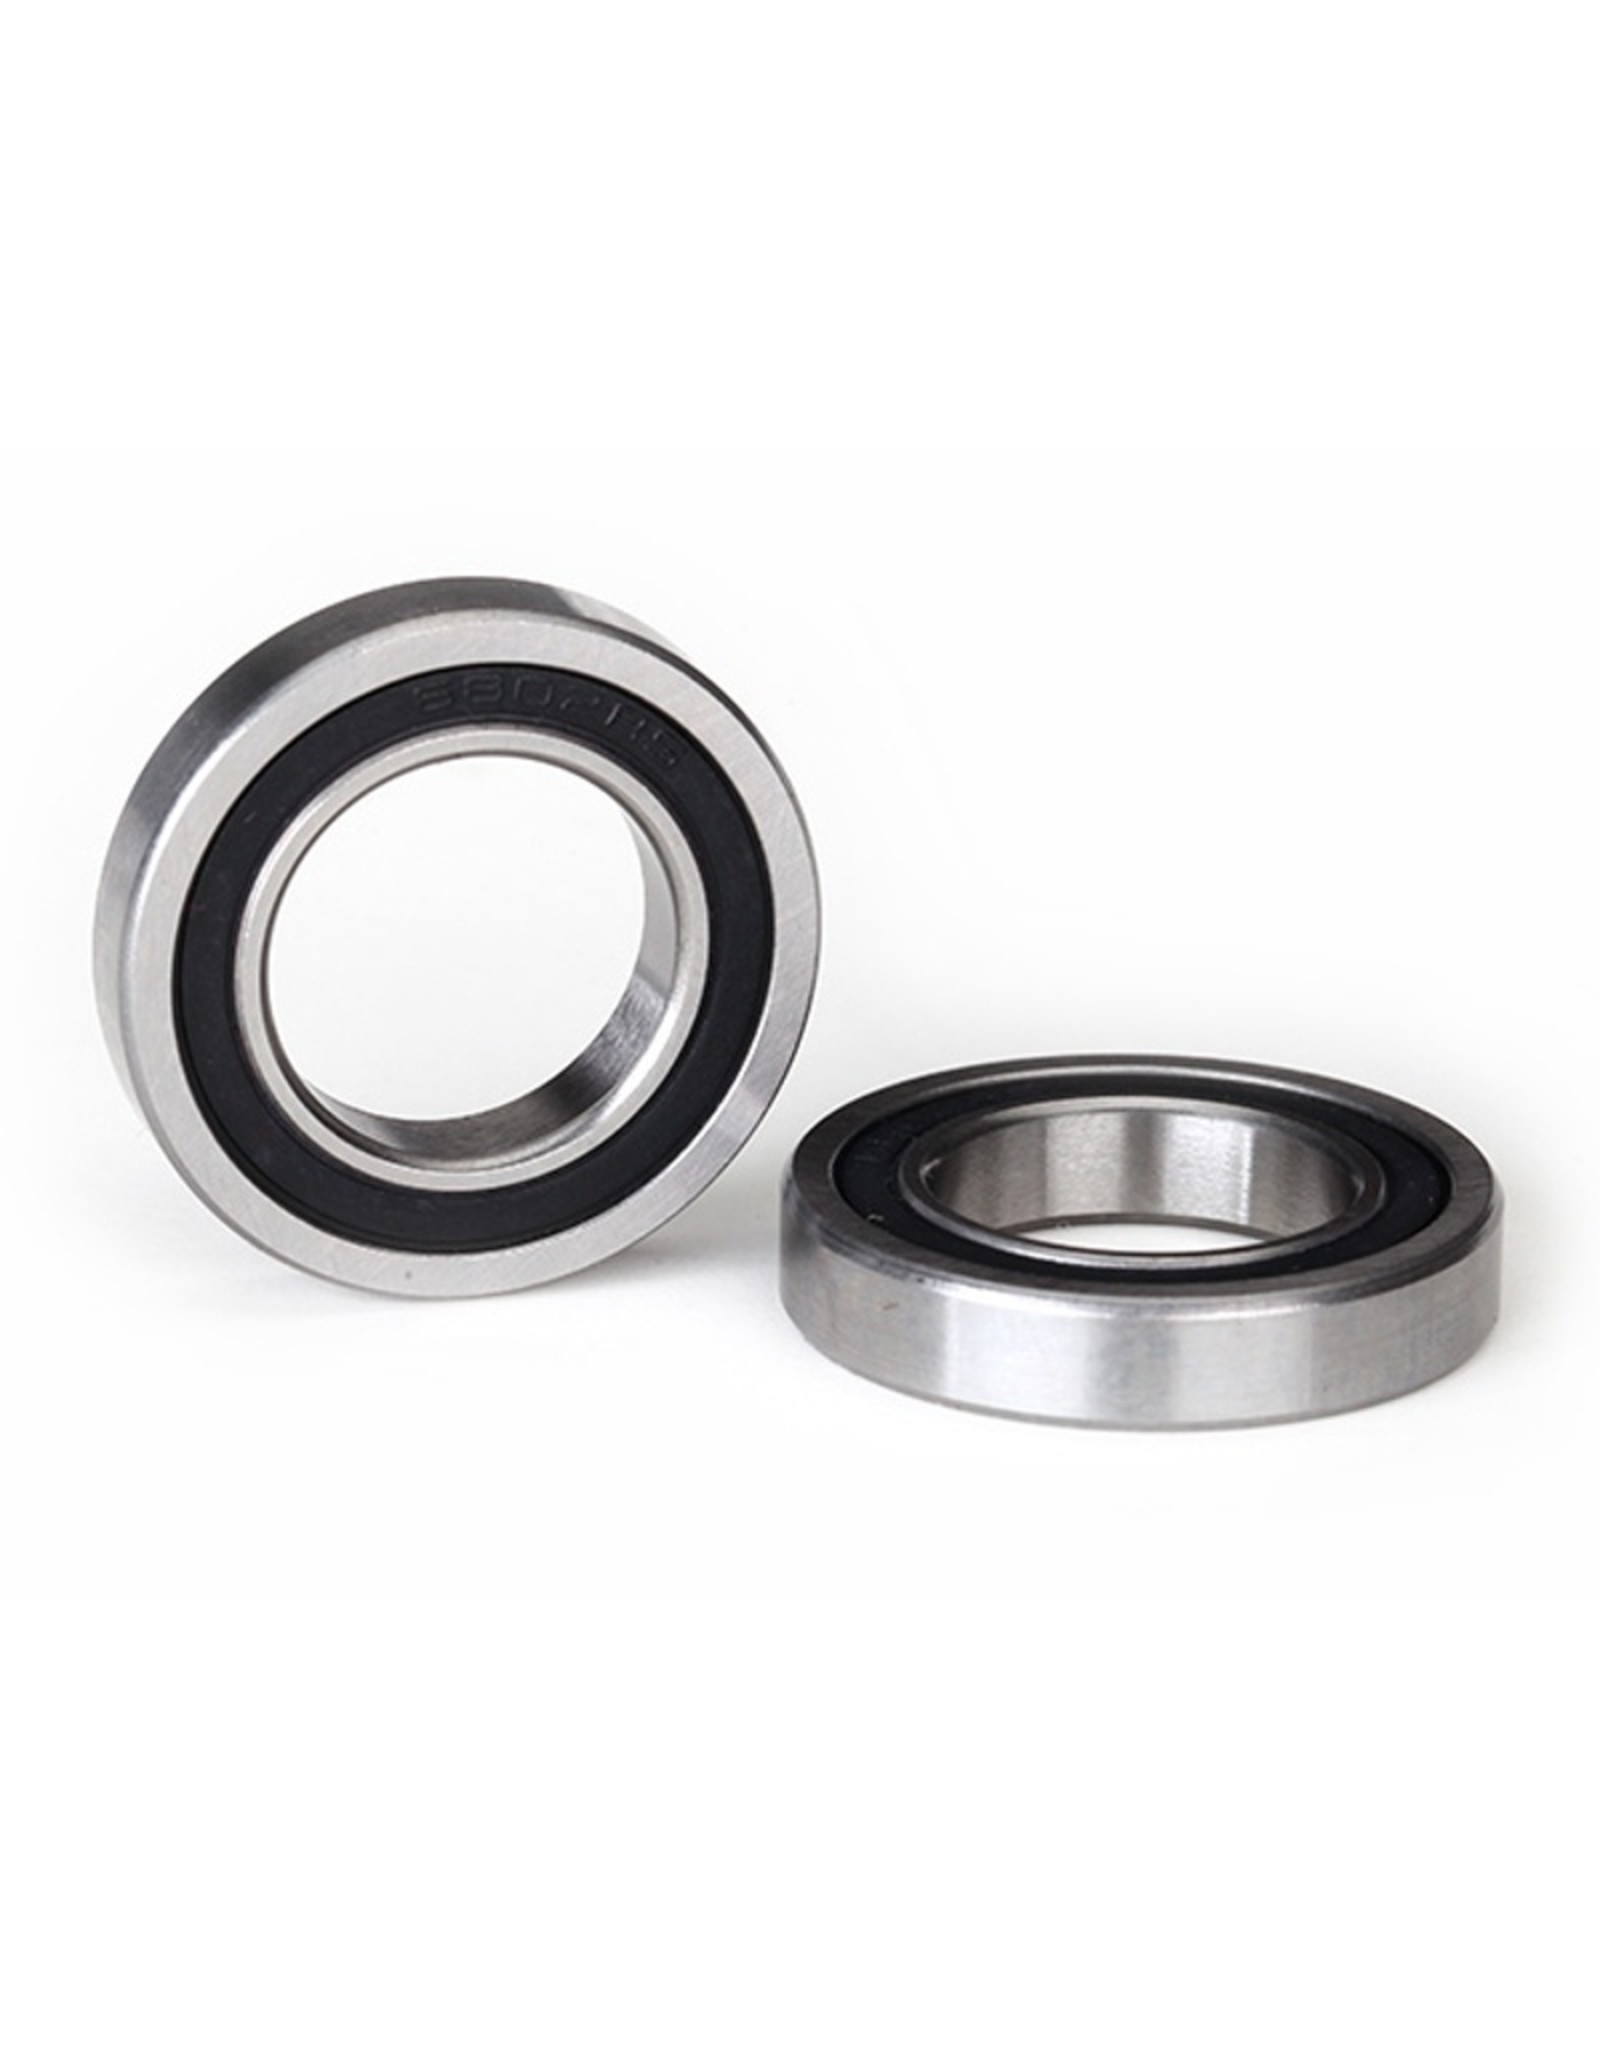 Traxxas TRA5108A Ball bearing, black rubber sealed (15x26x5mm) (2)